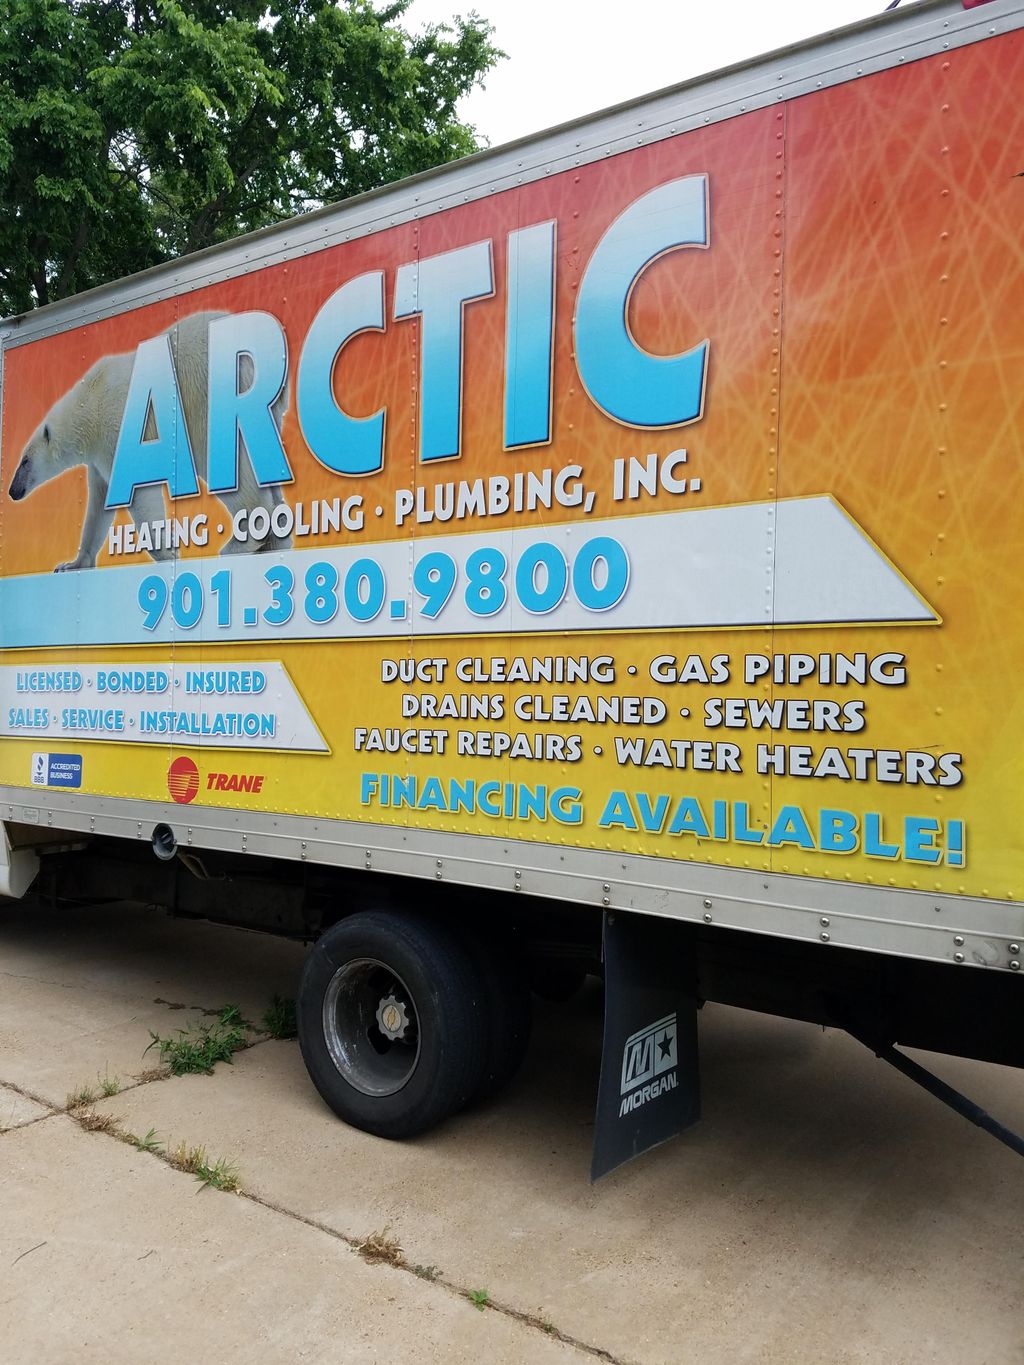 Arctic Heating, Cooling, Plumbing Inc.